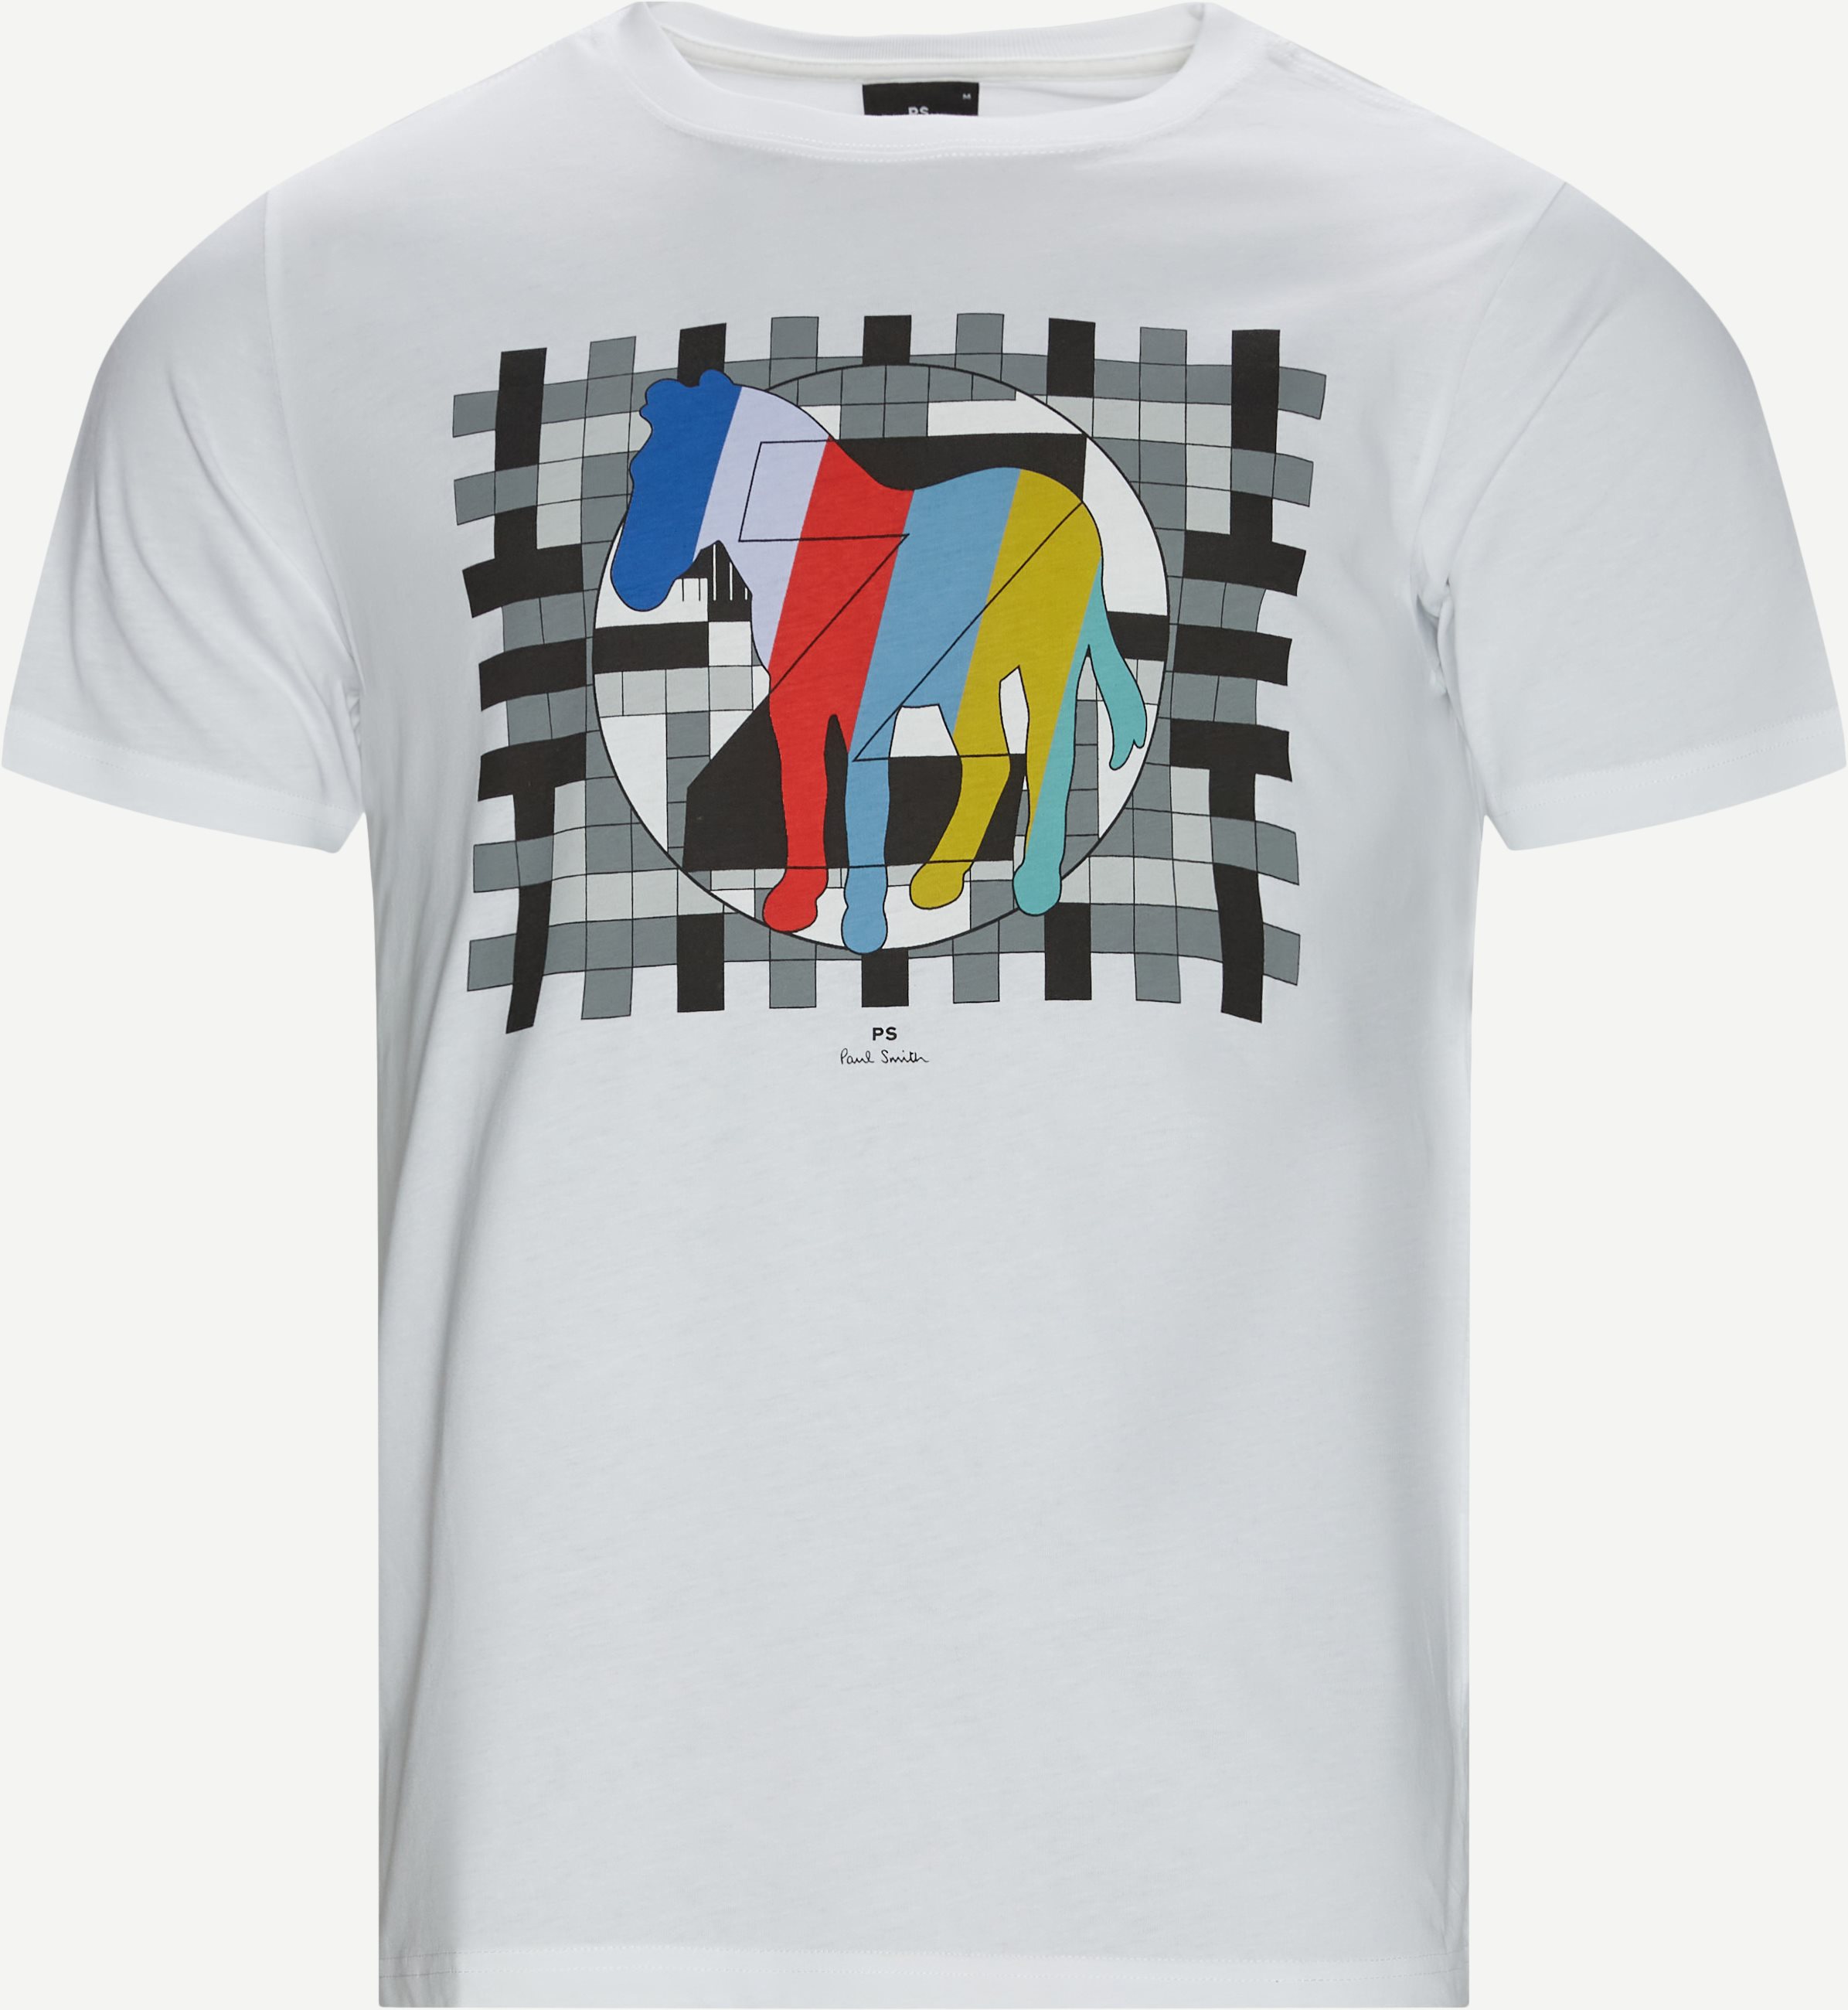 Zebra tee - T-shirts - Regular fit - Hvid